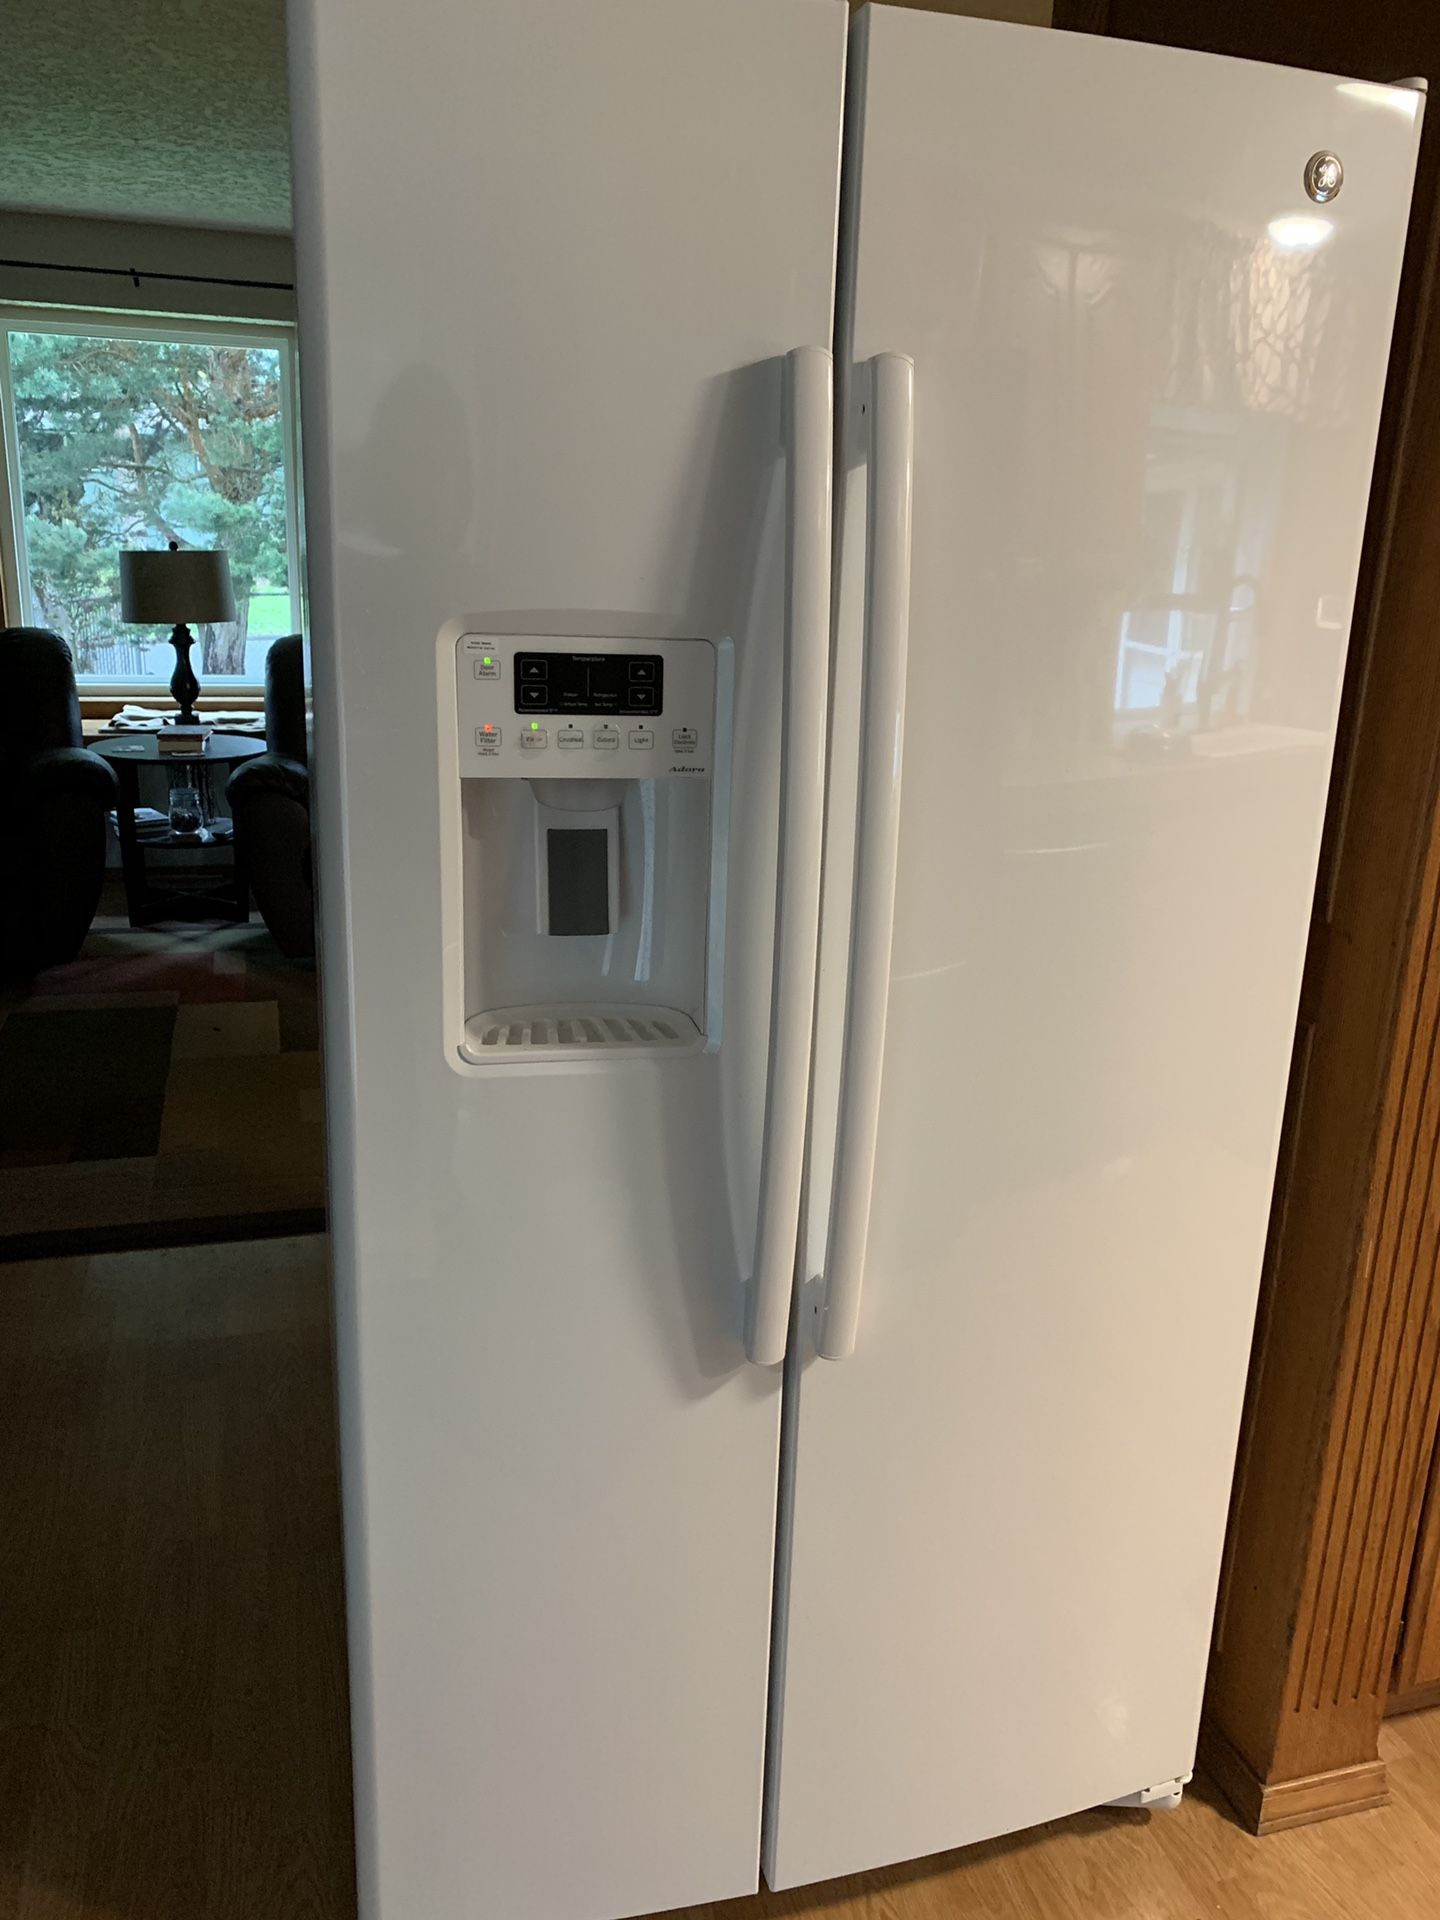 GE refrigerator- New